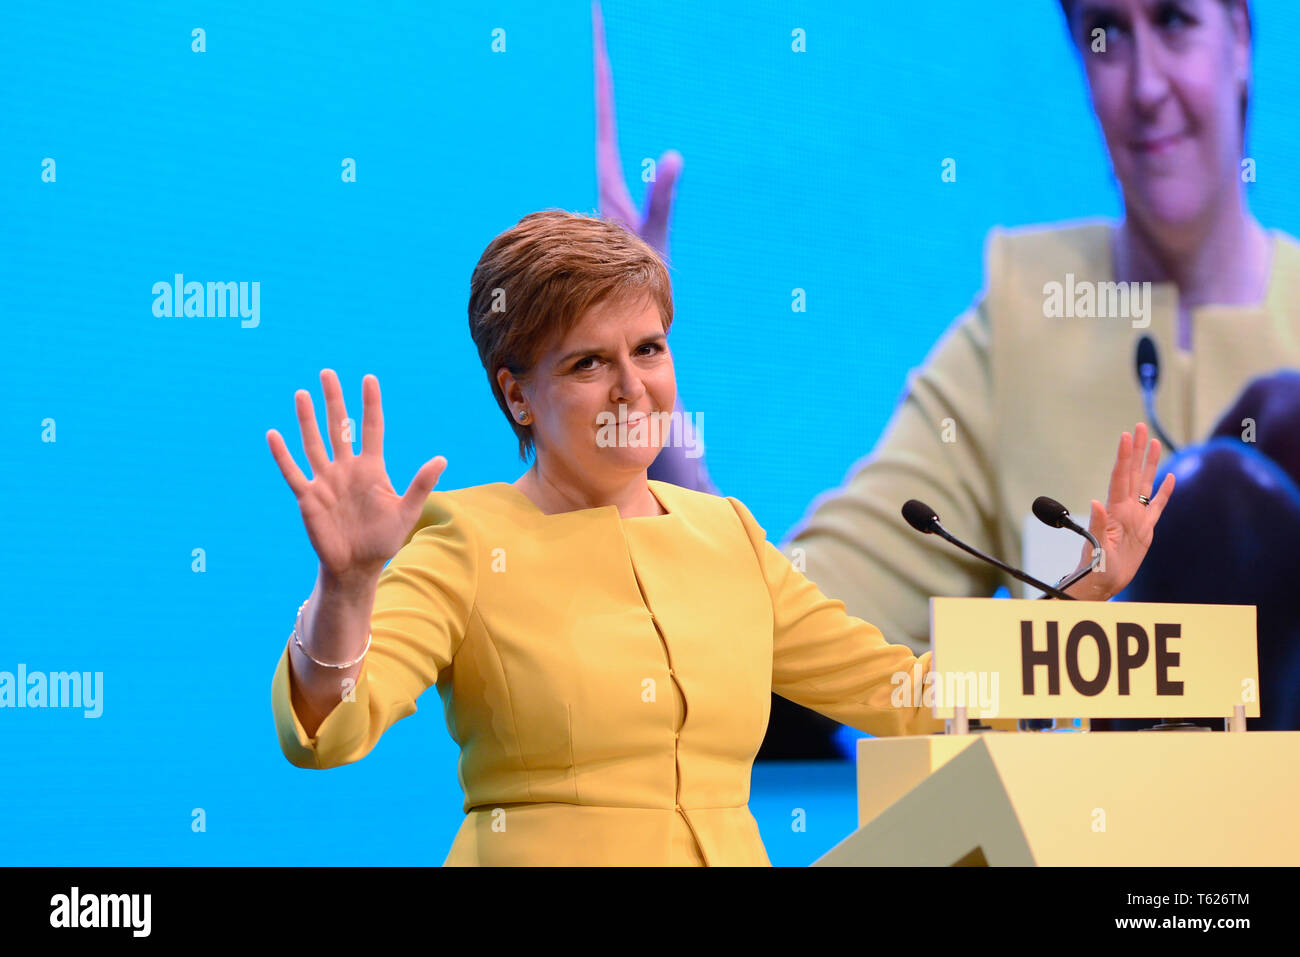 Edinburgh, UK. 28, April, 2019. Scotland's First Minister Nicola Sturgeon delivers her keynote address to the Scottish National Party's Spring Conference in the Edinburgh International Conference Centre. © Ken Jack / Alamy Live News Stock Photo